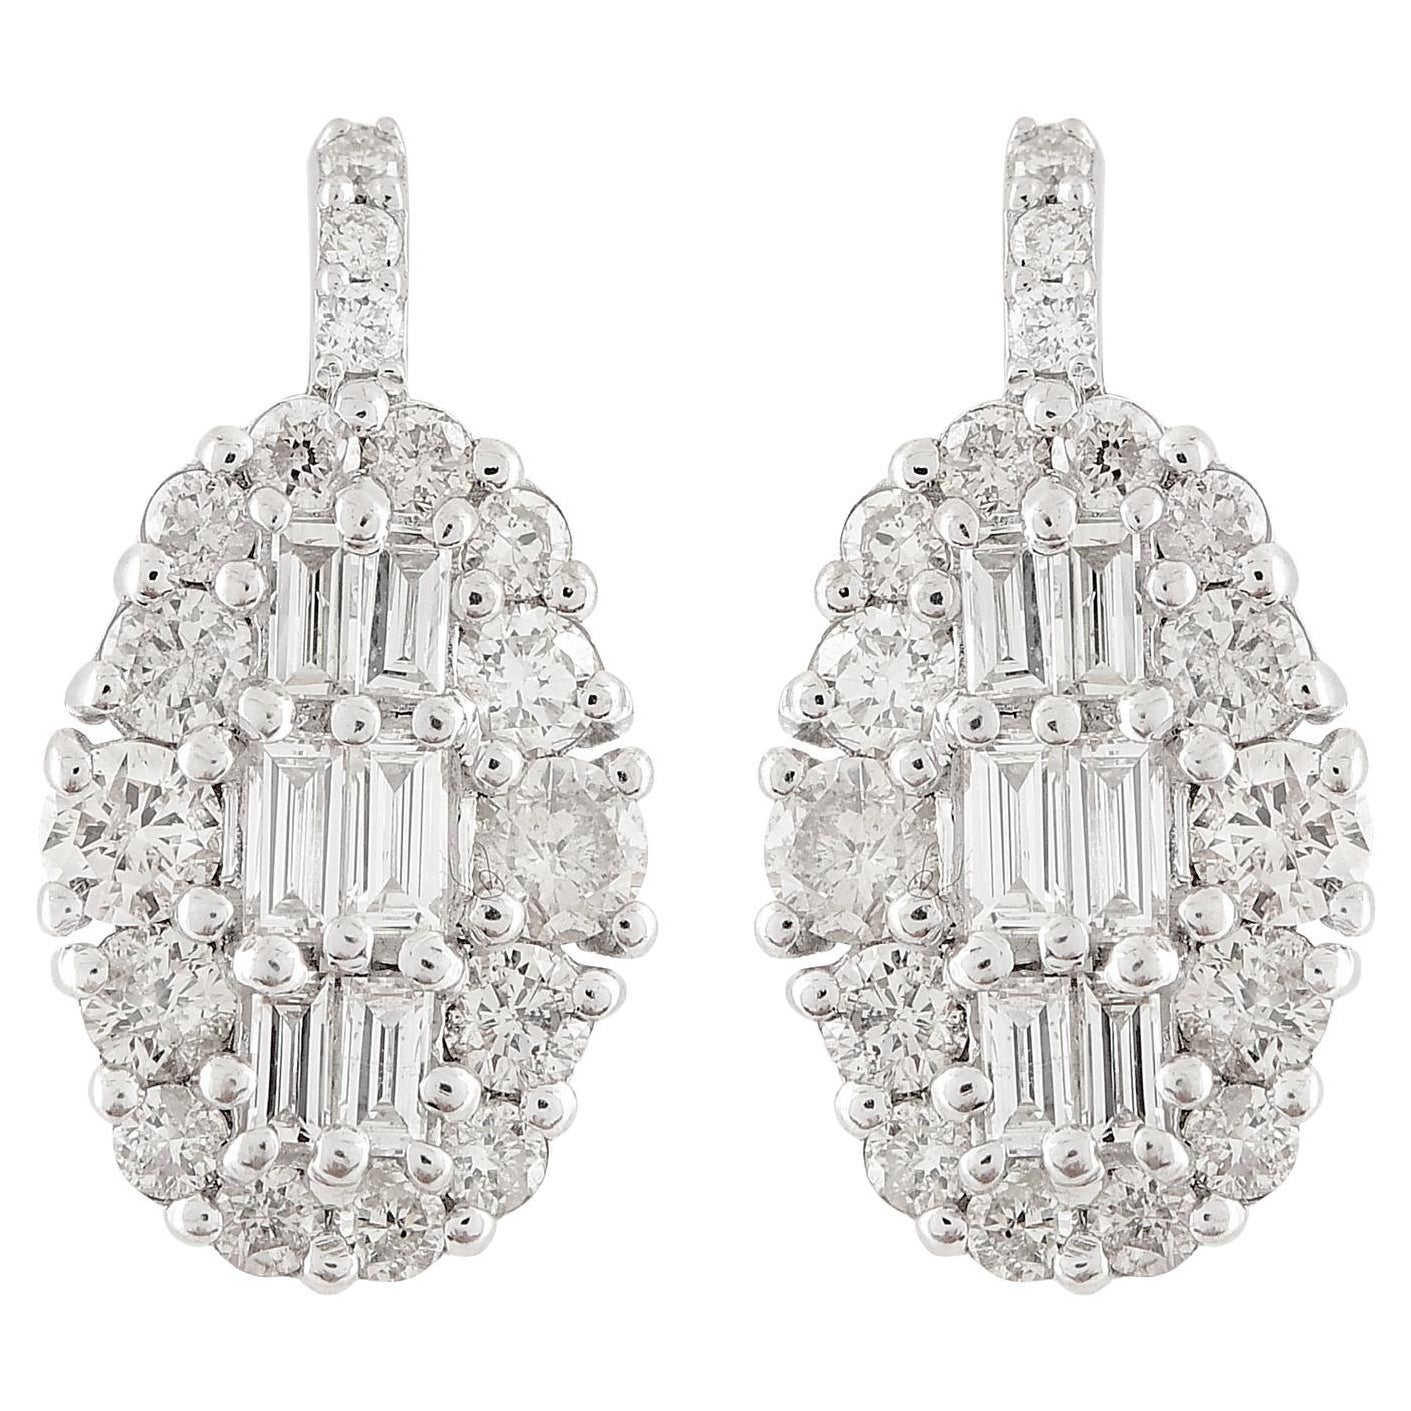 1.01 Carat Baguette Diamond Designer Hook Earrings Solid 10k White Gold Jewelry